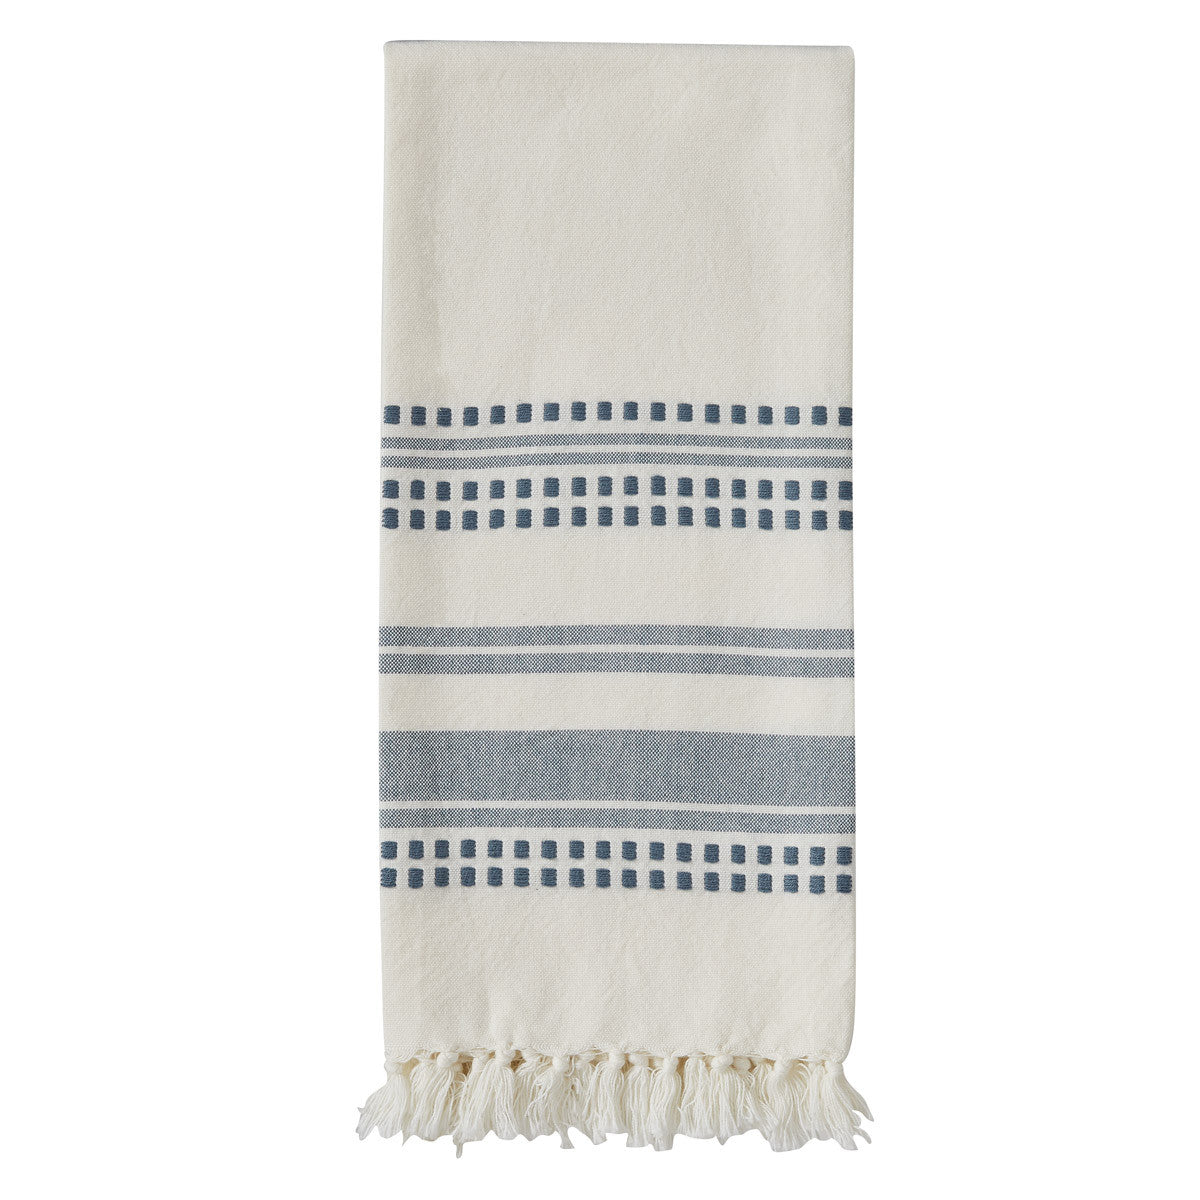 Kyla Woven Towel - Marine Bluet  Set of 2 Park Designs